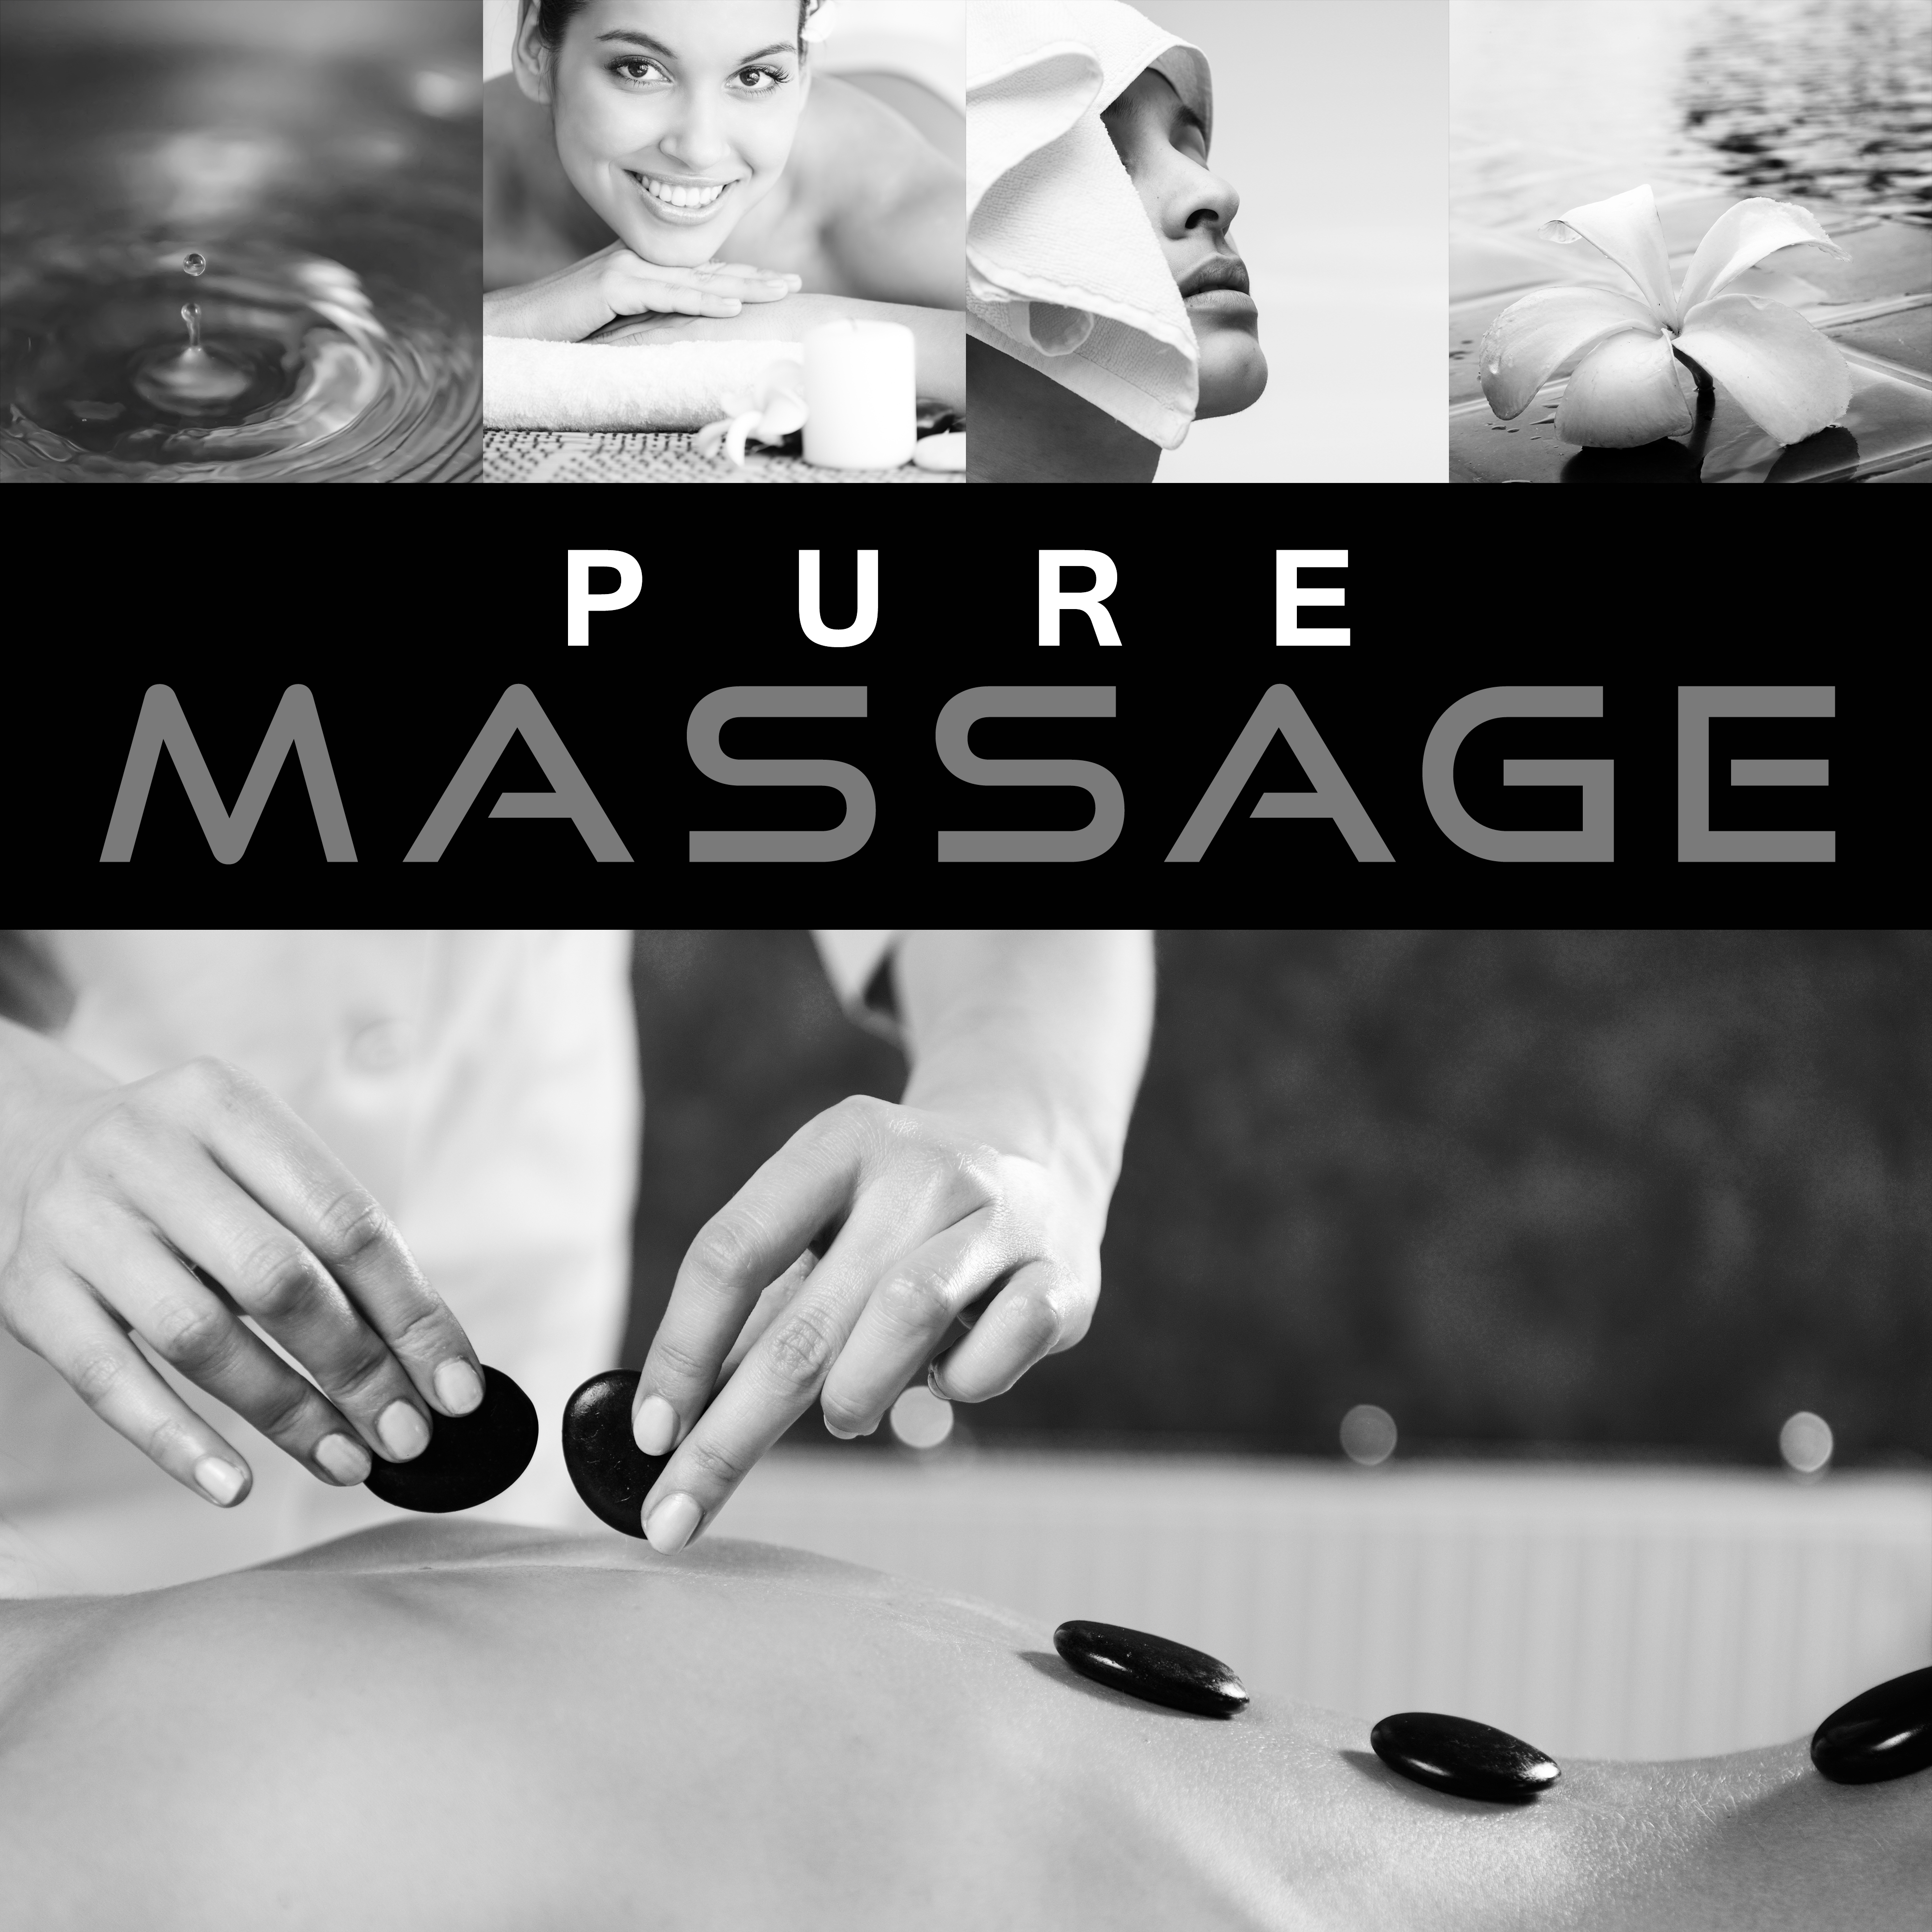 Pure Massage  Calming Nature Sounds, Relax, Spa, Massage, Wellness, Zen Therapy Music